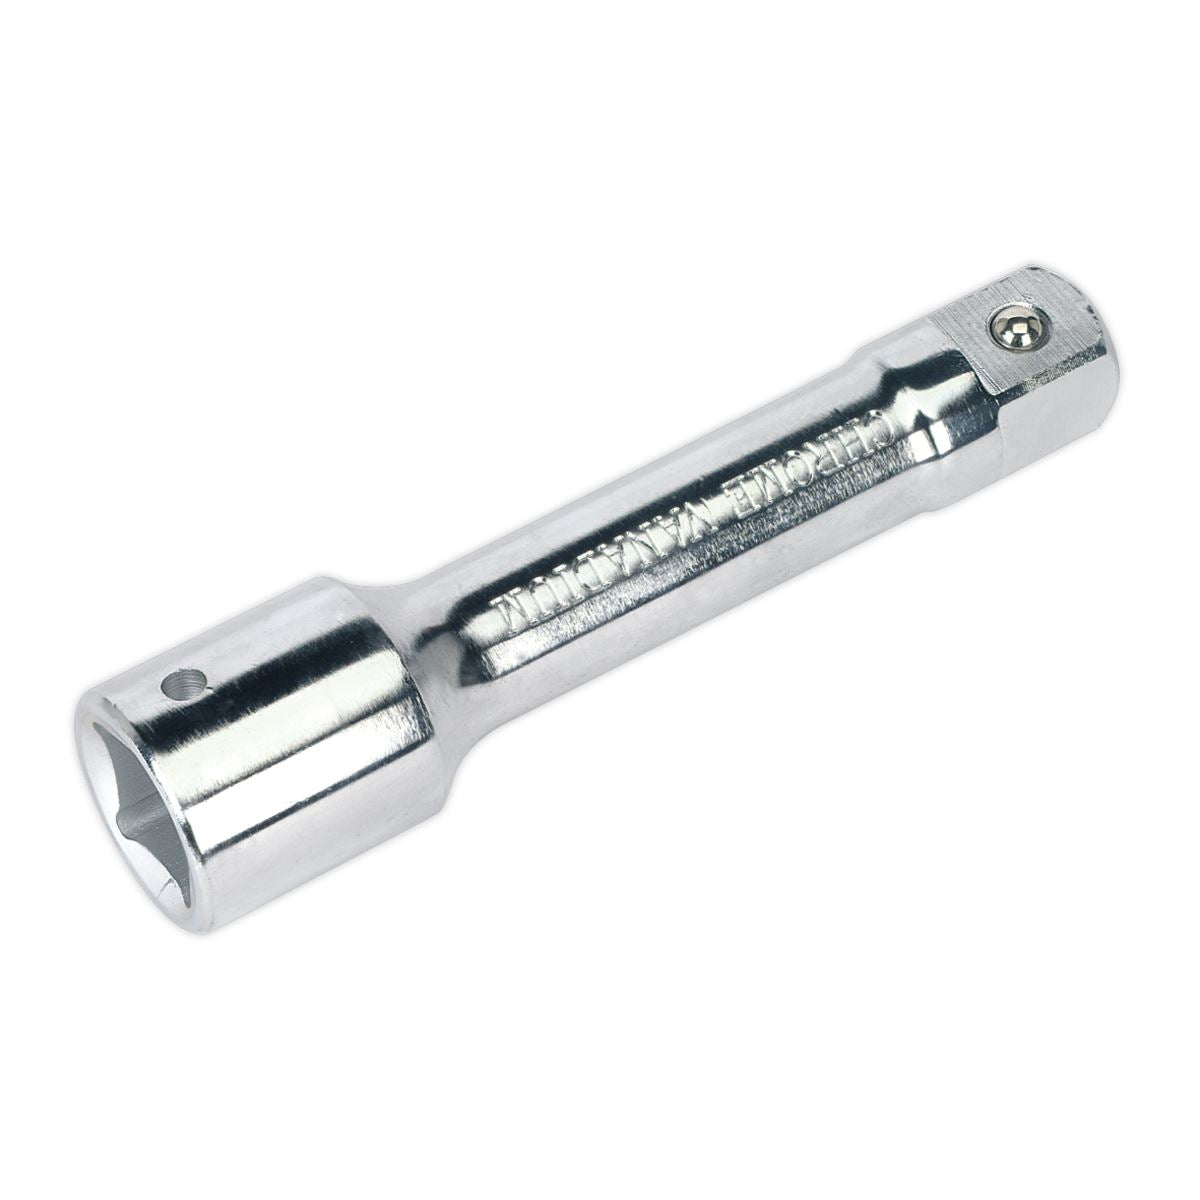 Sealey Premier Extension Bar 150mm 3/4"Sq Drive